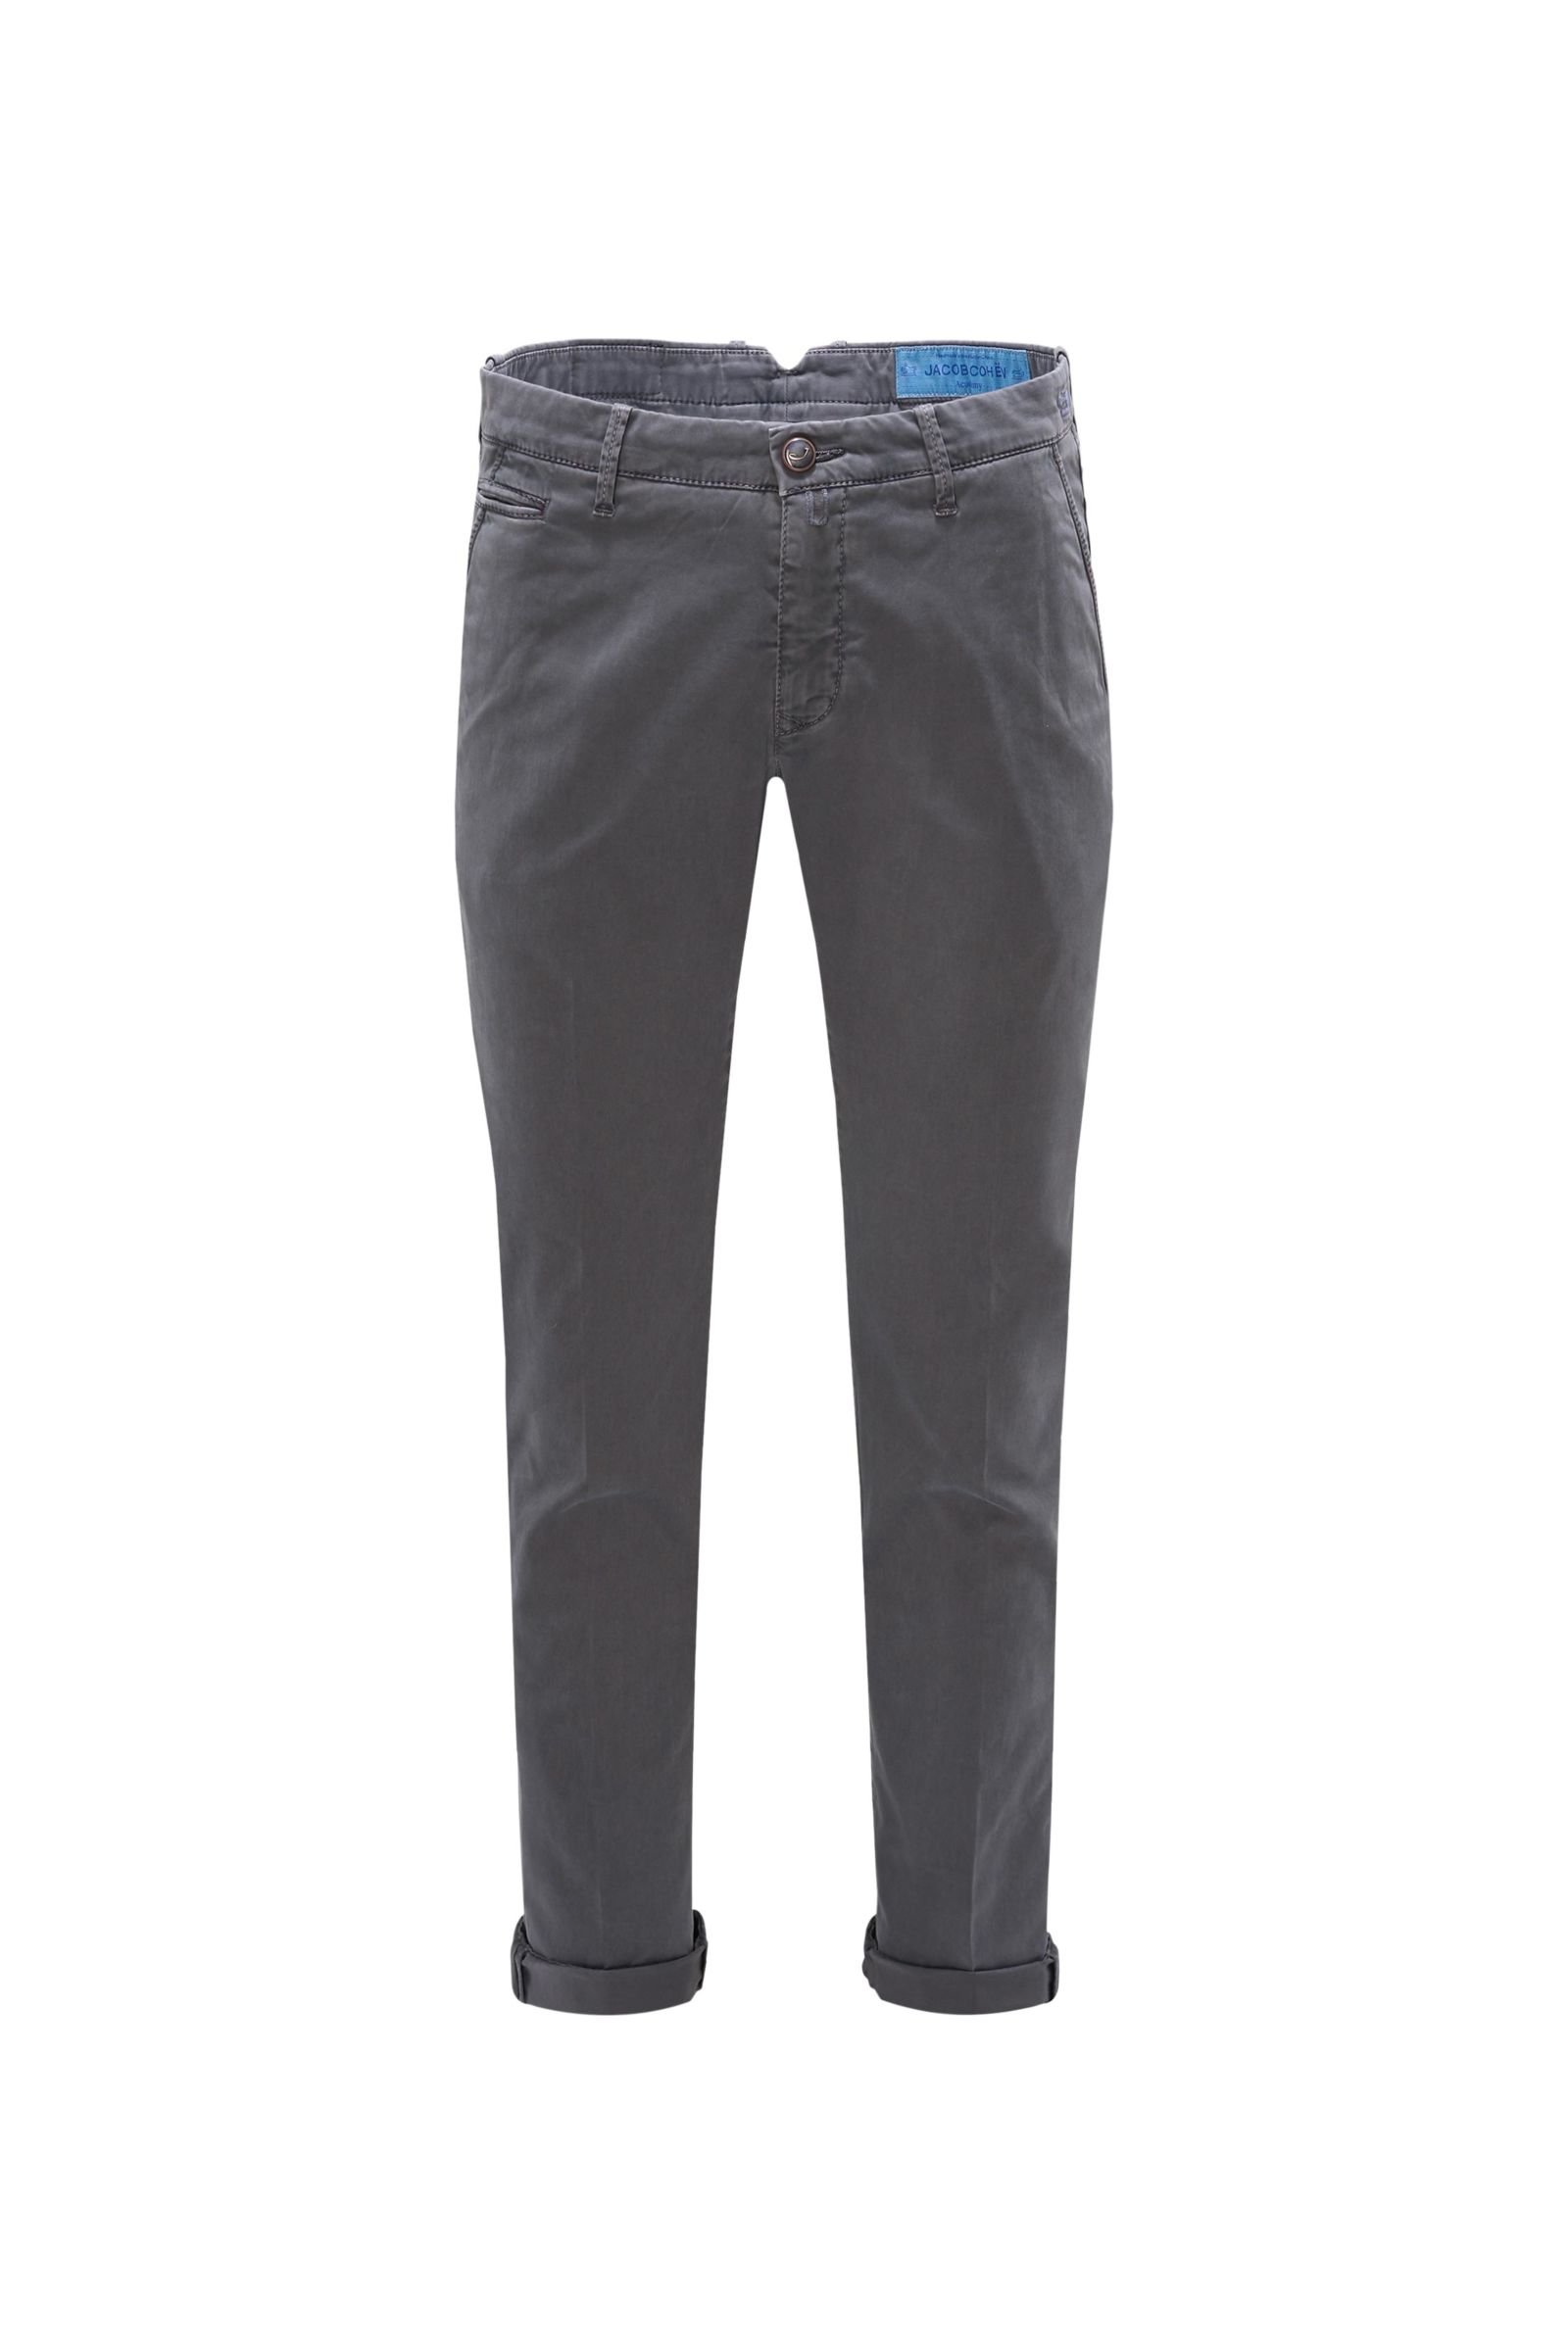 Cotton trousers 'B Comfort Slim Fit' dark grey